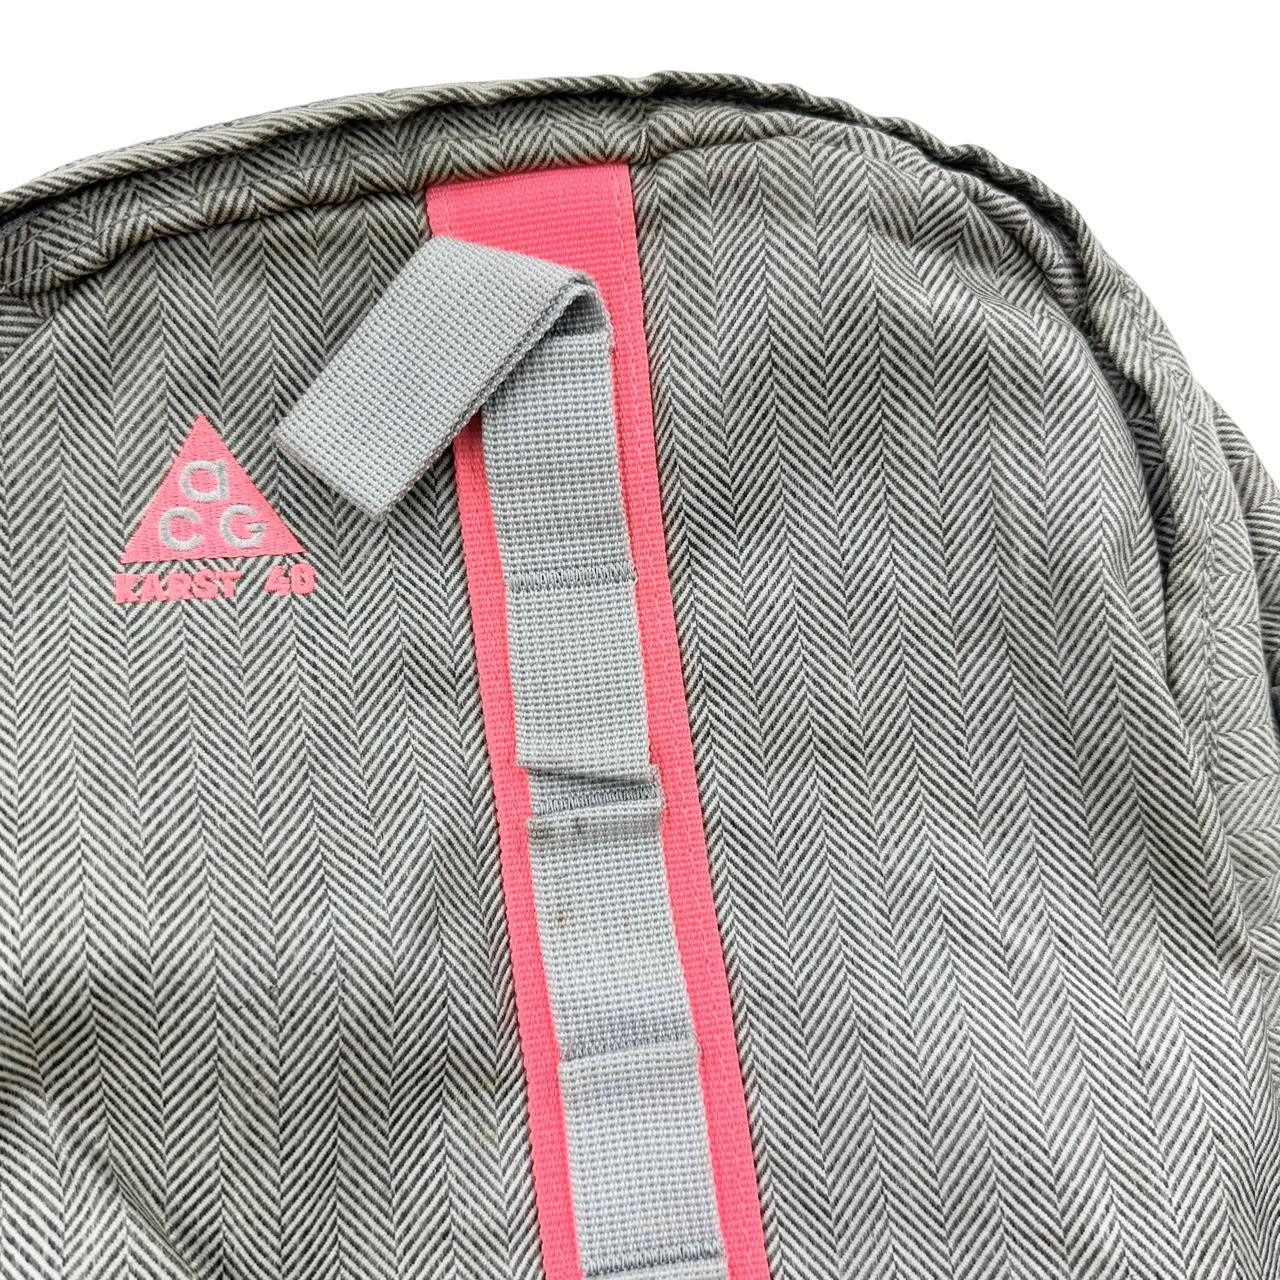 Vintage Nike ACG backpack - Known Source